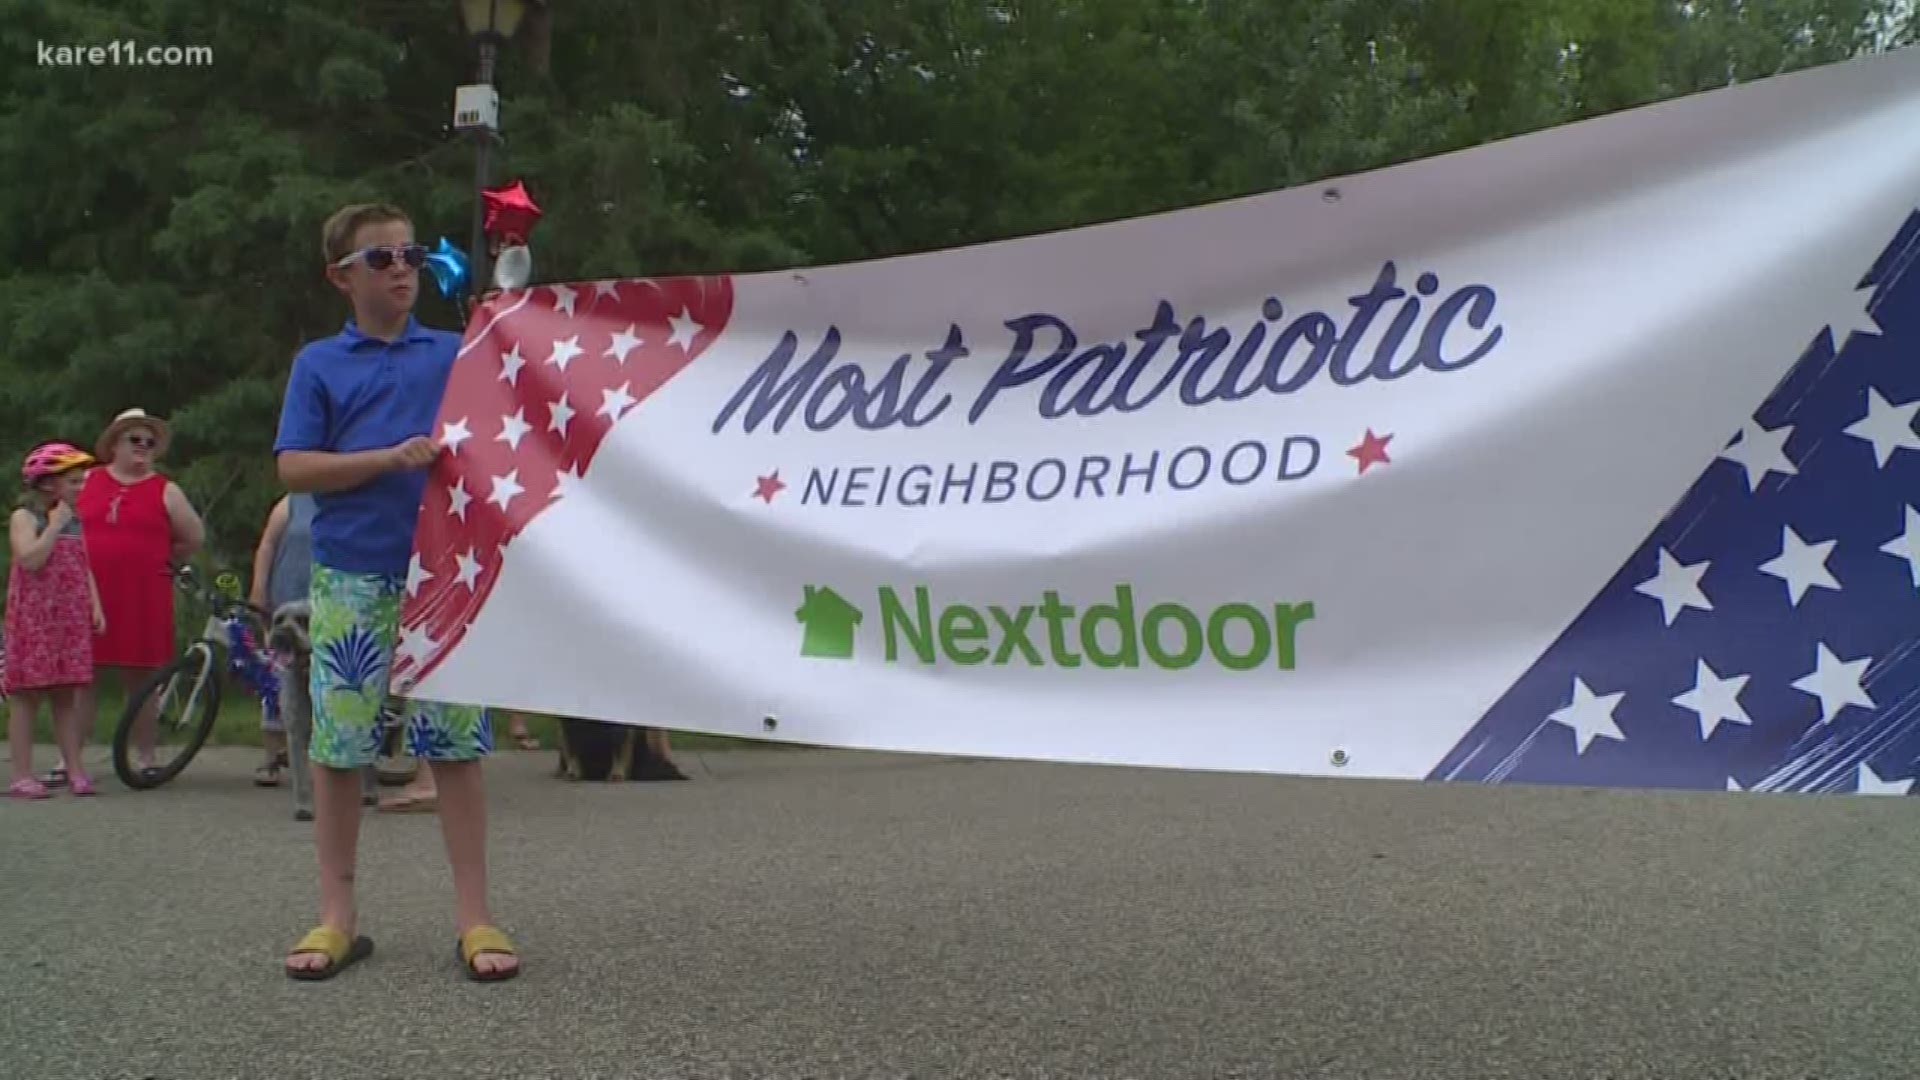 Plymouth neighborhood voted top five patriotic neighborhoods